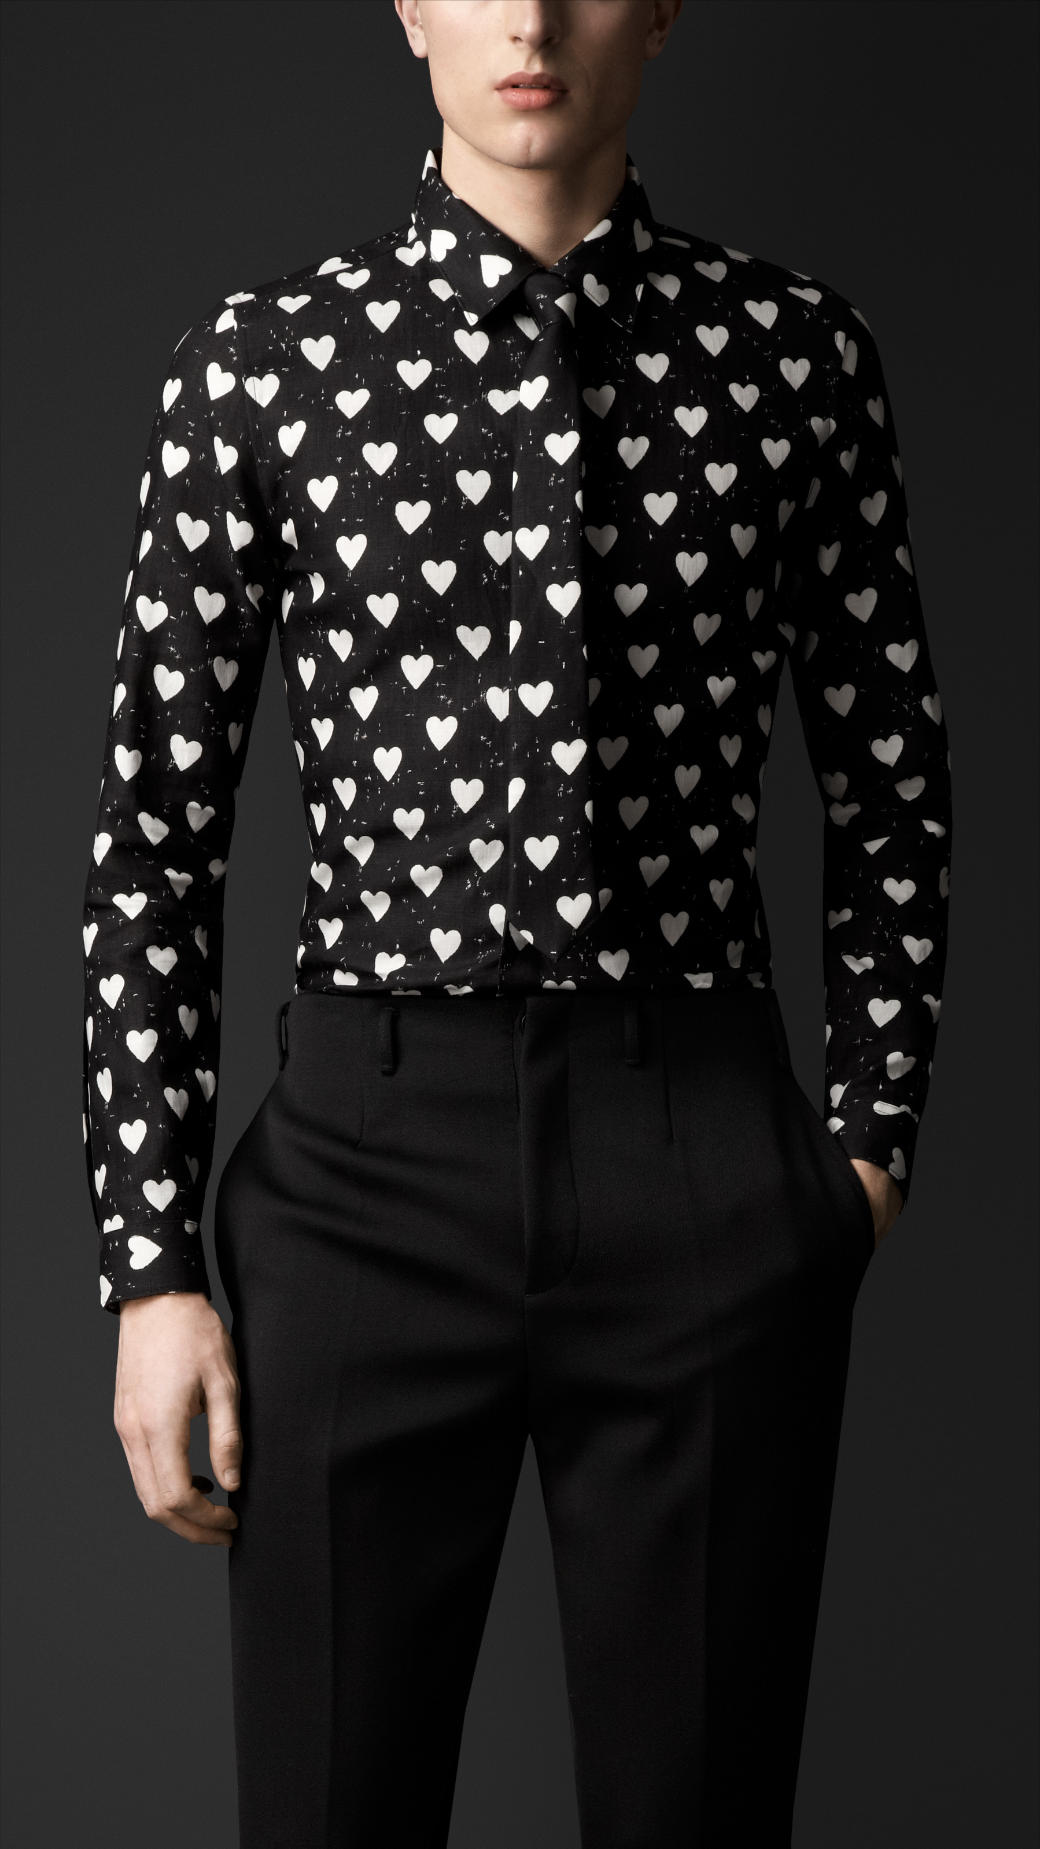 Lyst - Burberry Heart Print Cotton Shirt in Black for Men